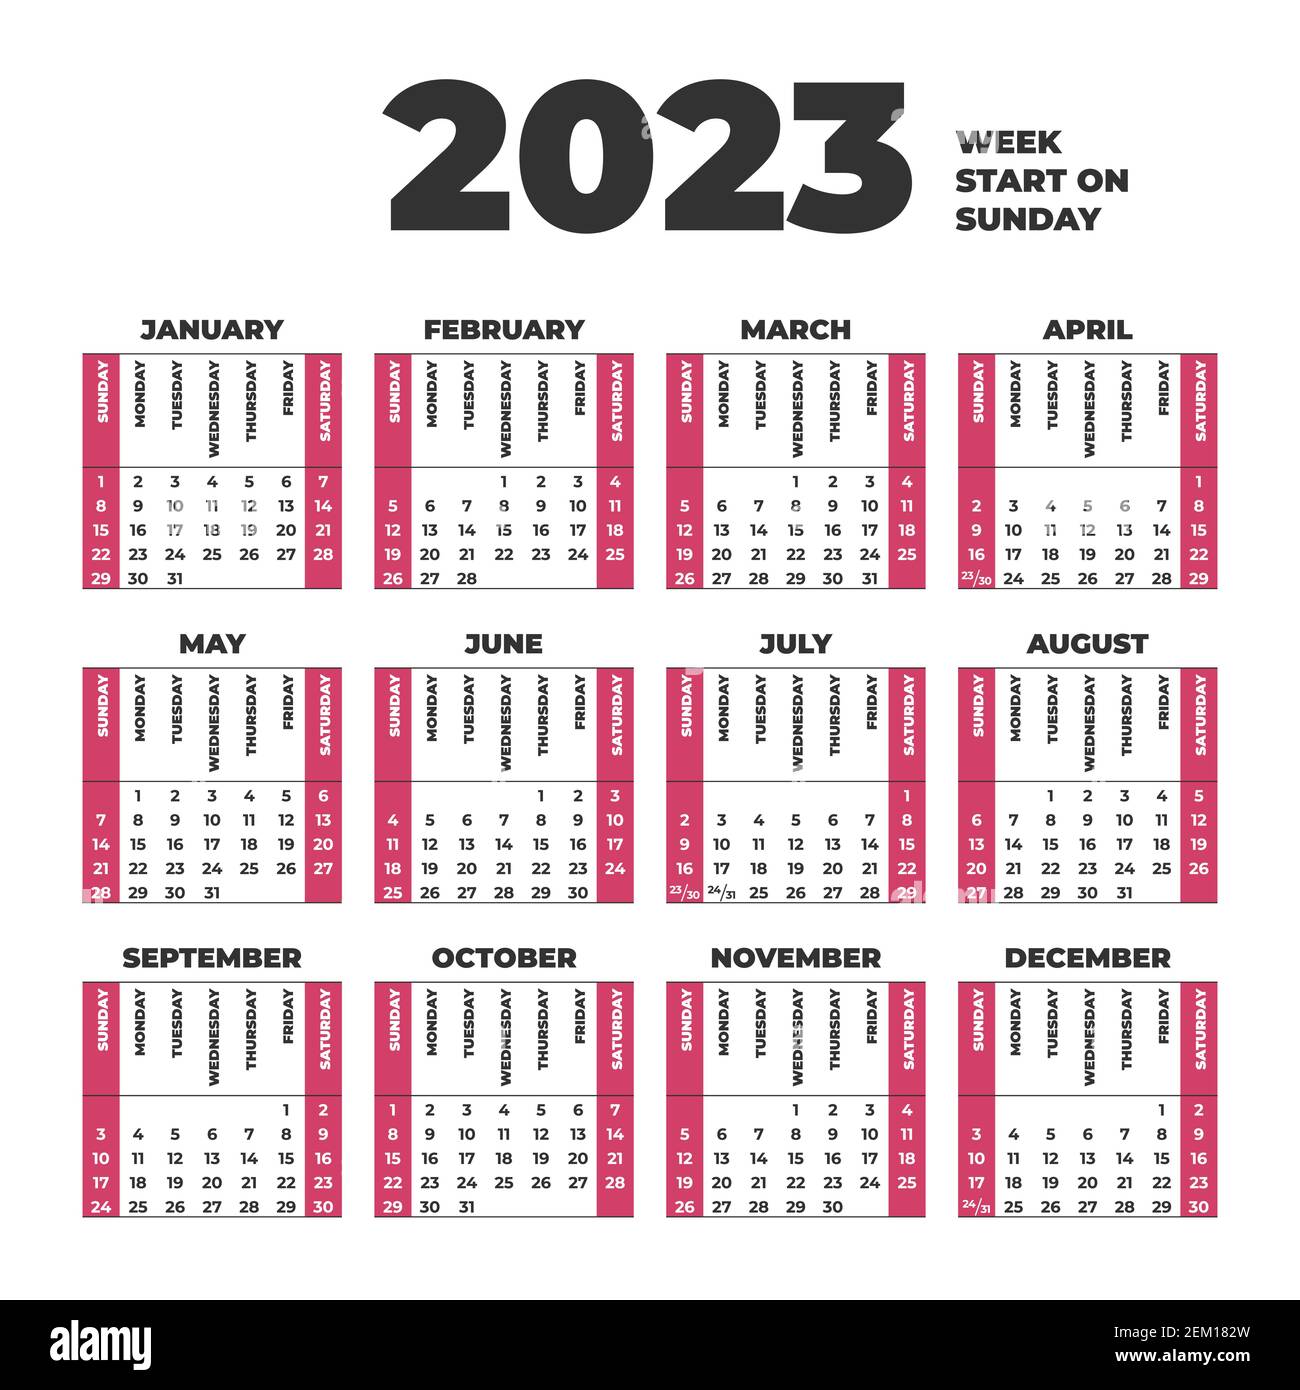 2023-calendar-template-with-weeks-start-on-sunday-stock-vector-image-art-alamy